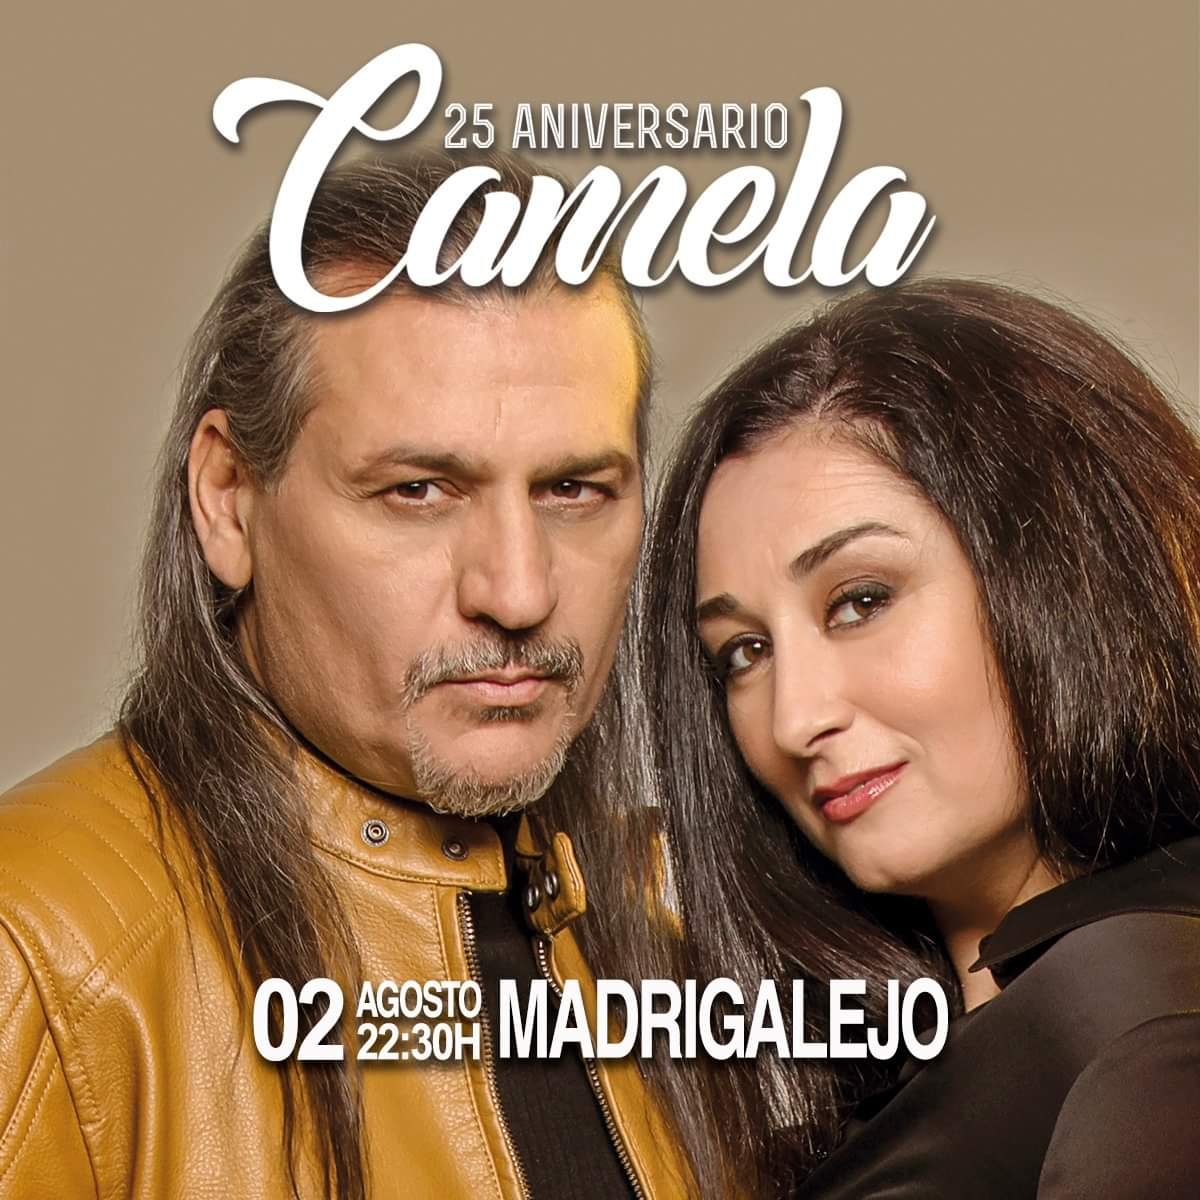 Camela 2019 - Madrigalejo (Cáceres)